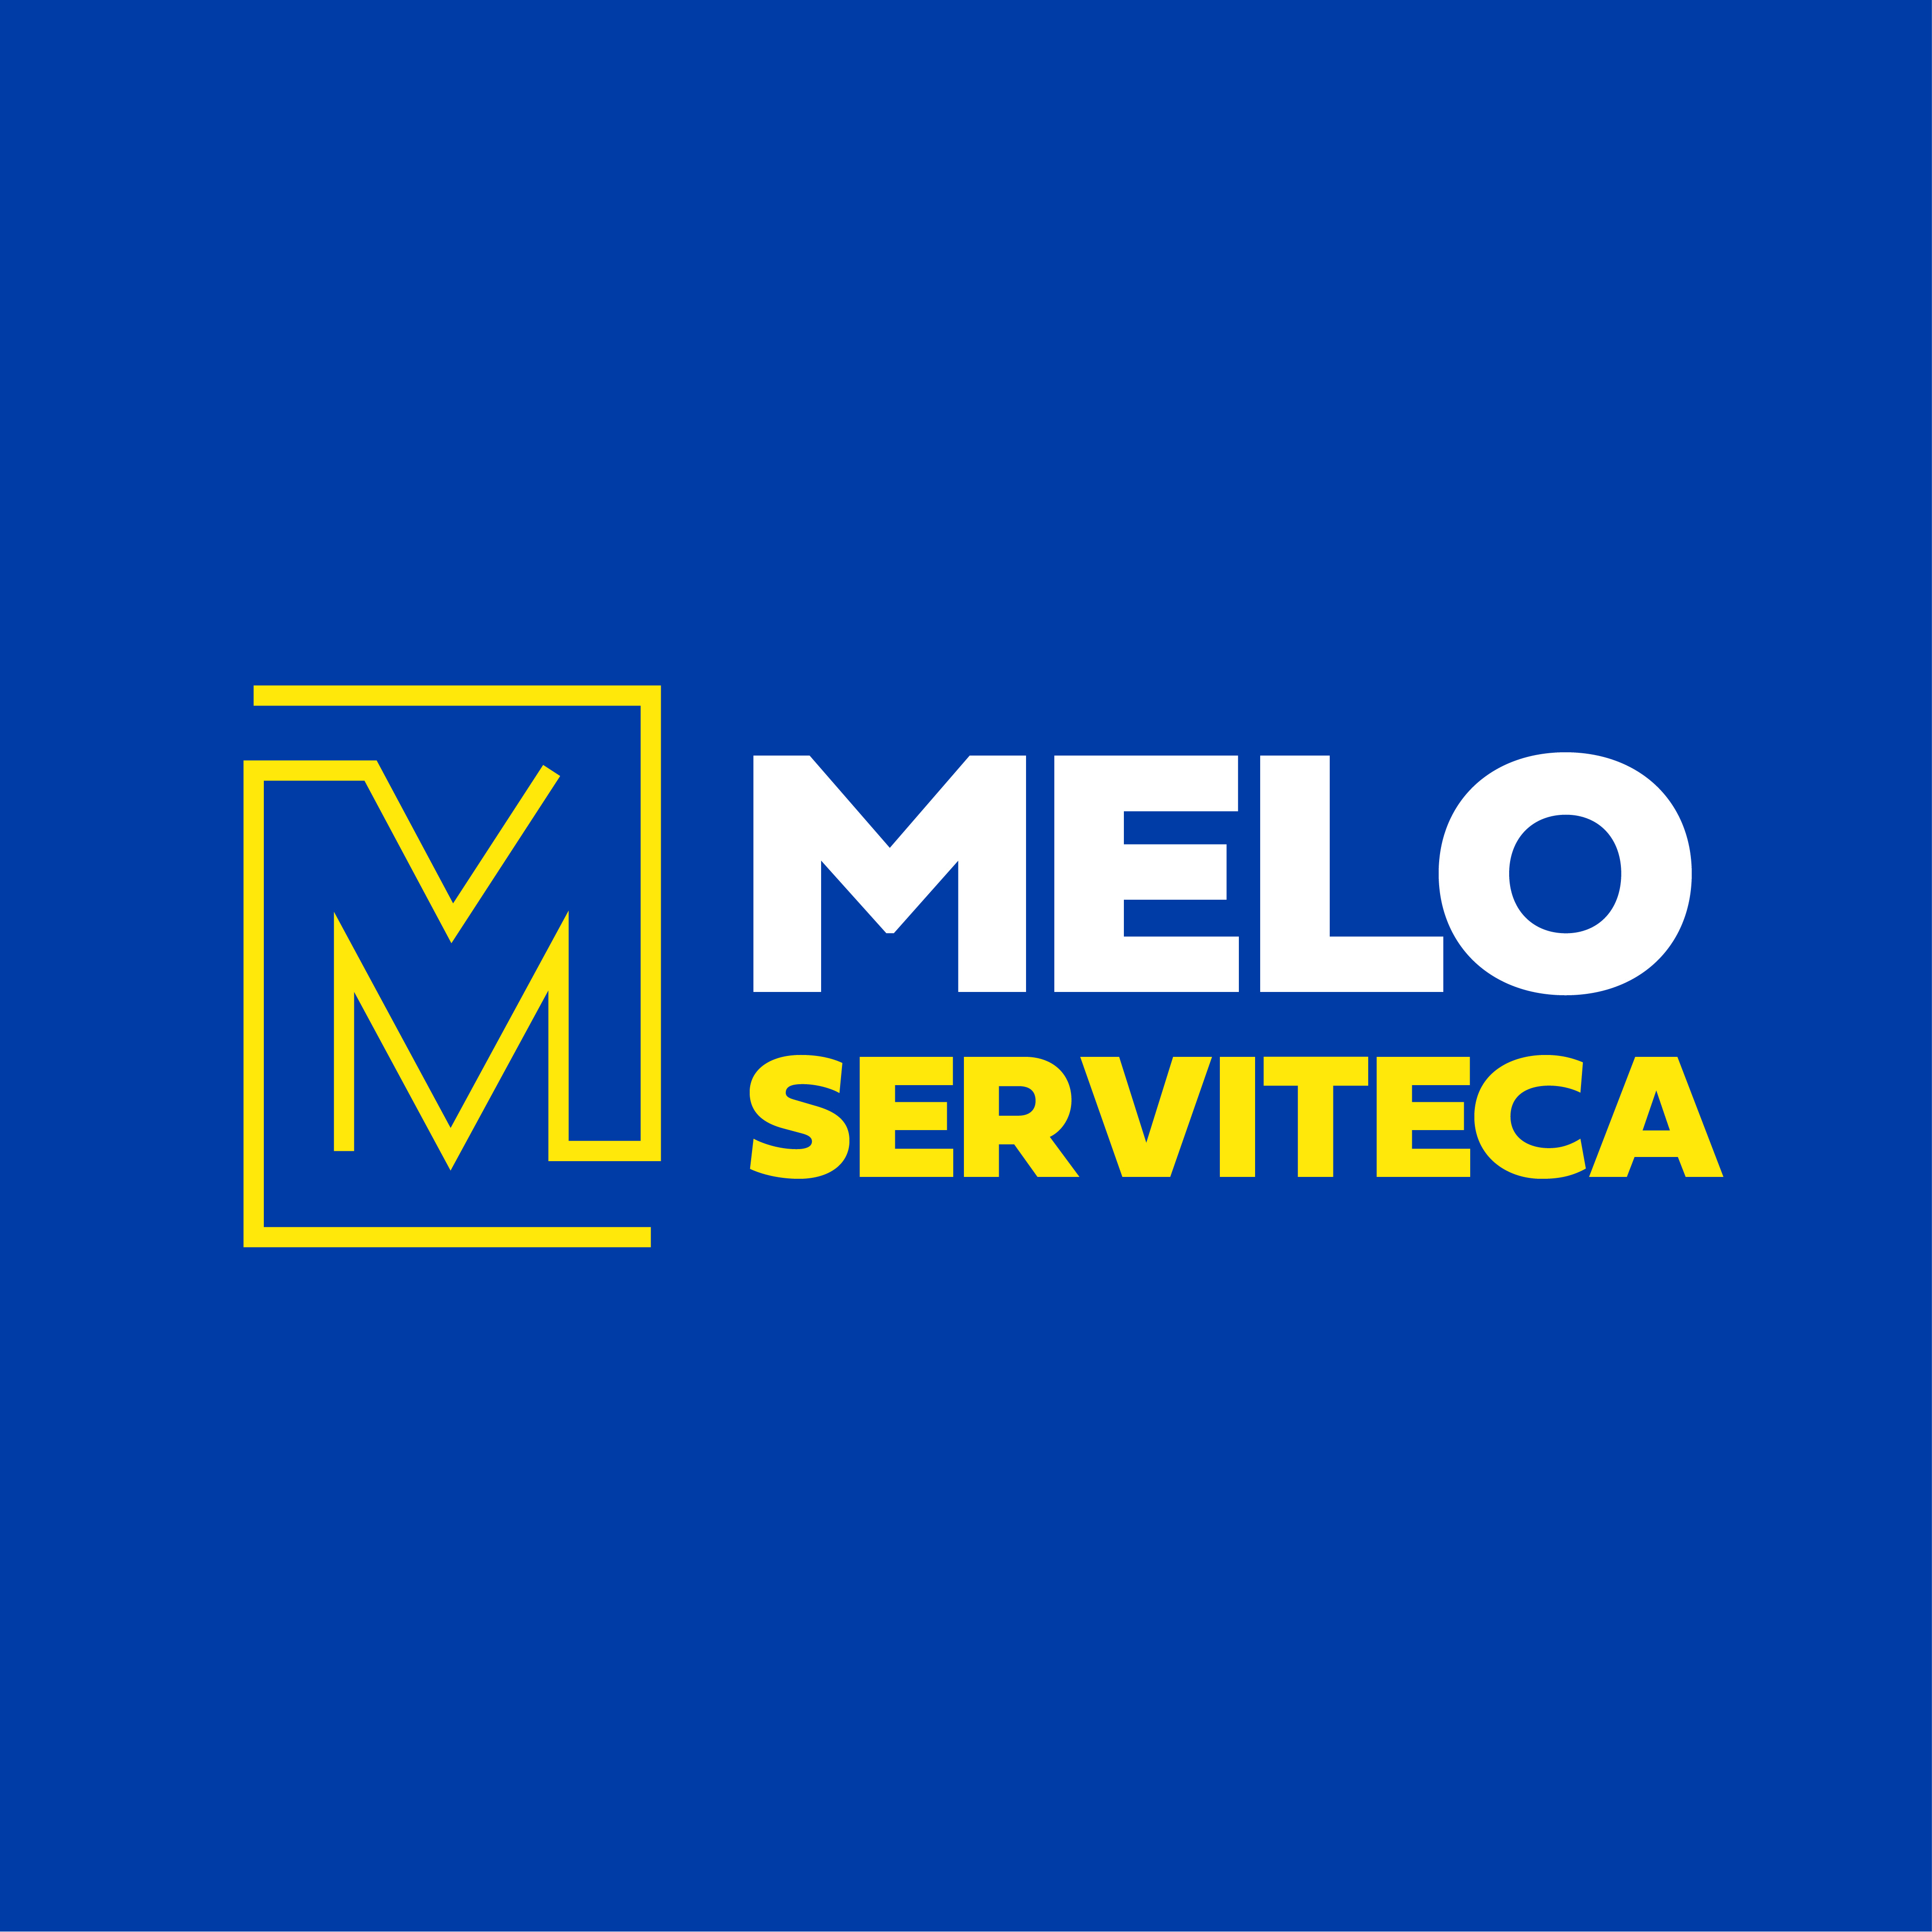 Serviteca Melo - Lautaro IX Región